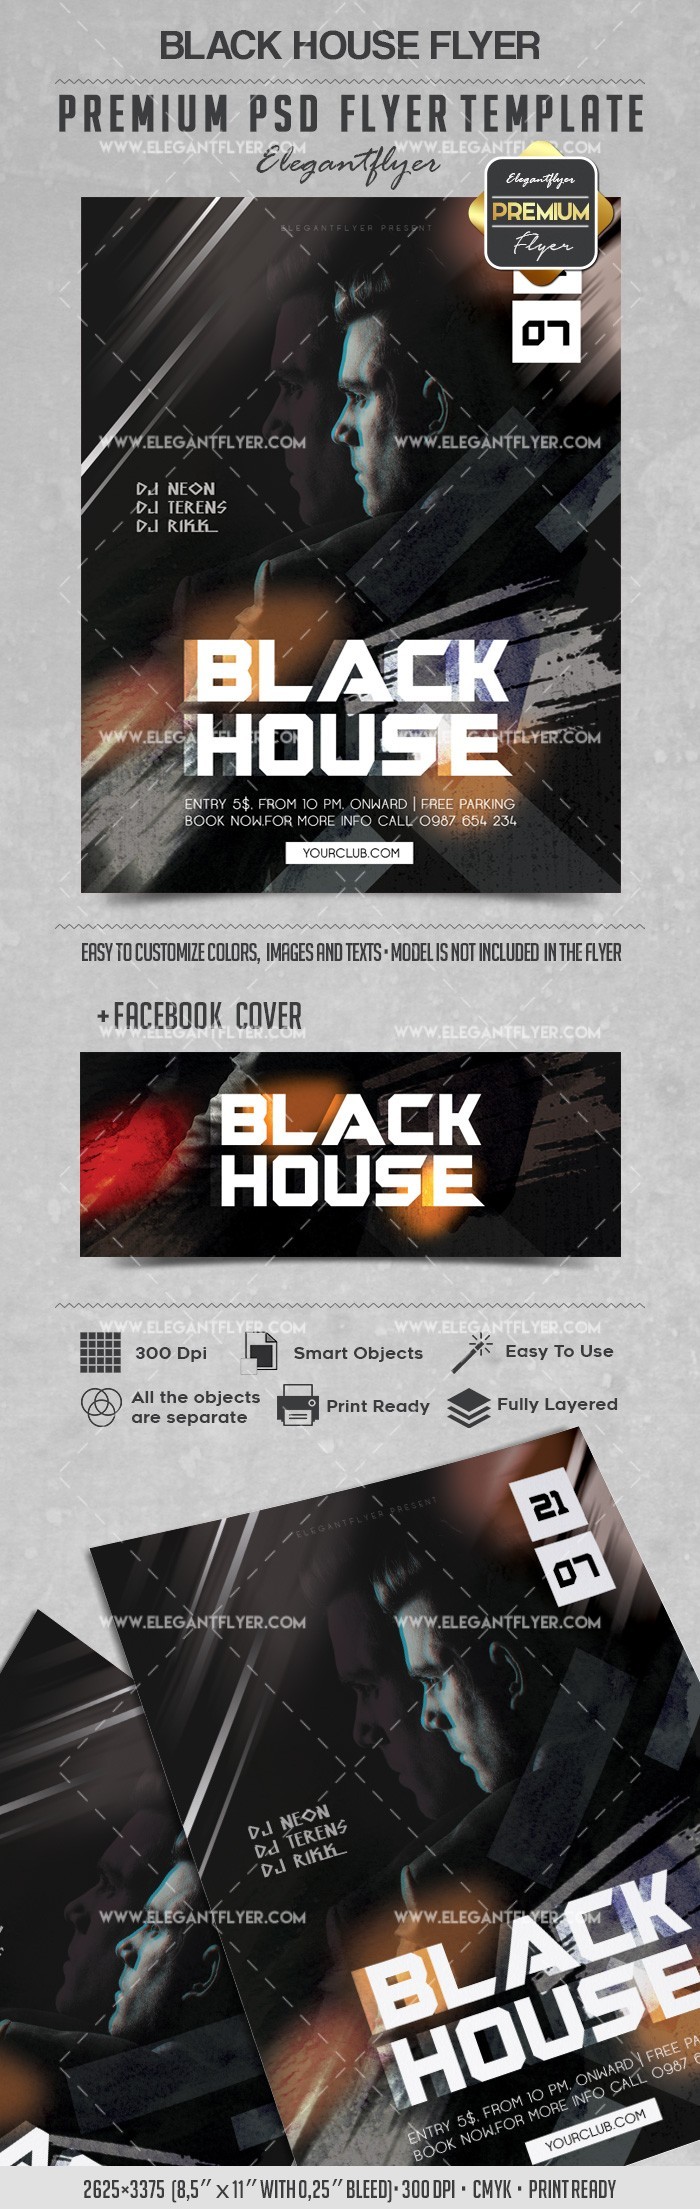 Black House by ElegantFlyer